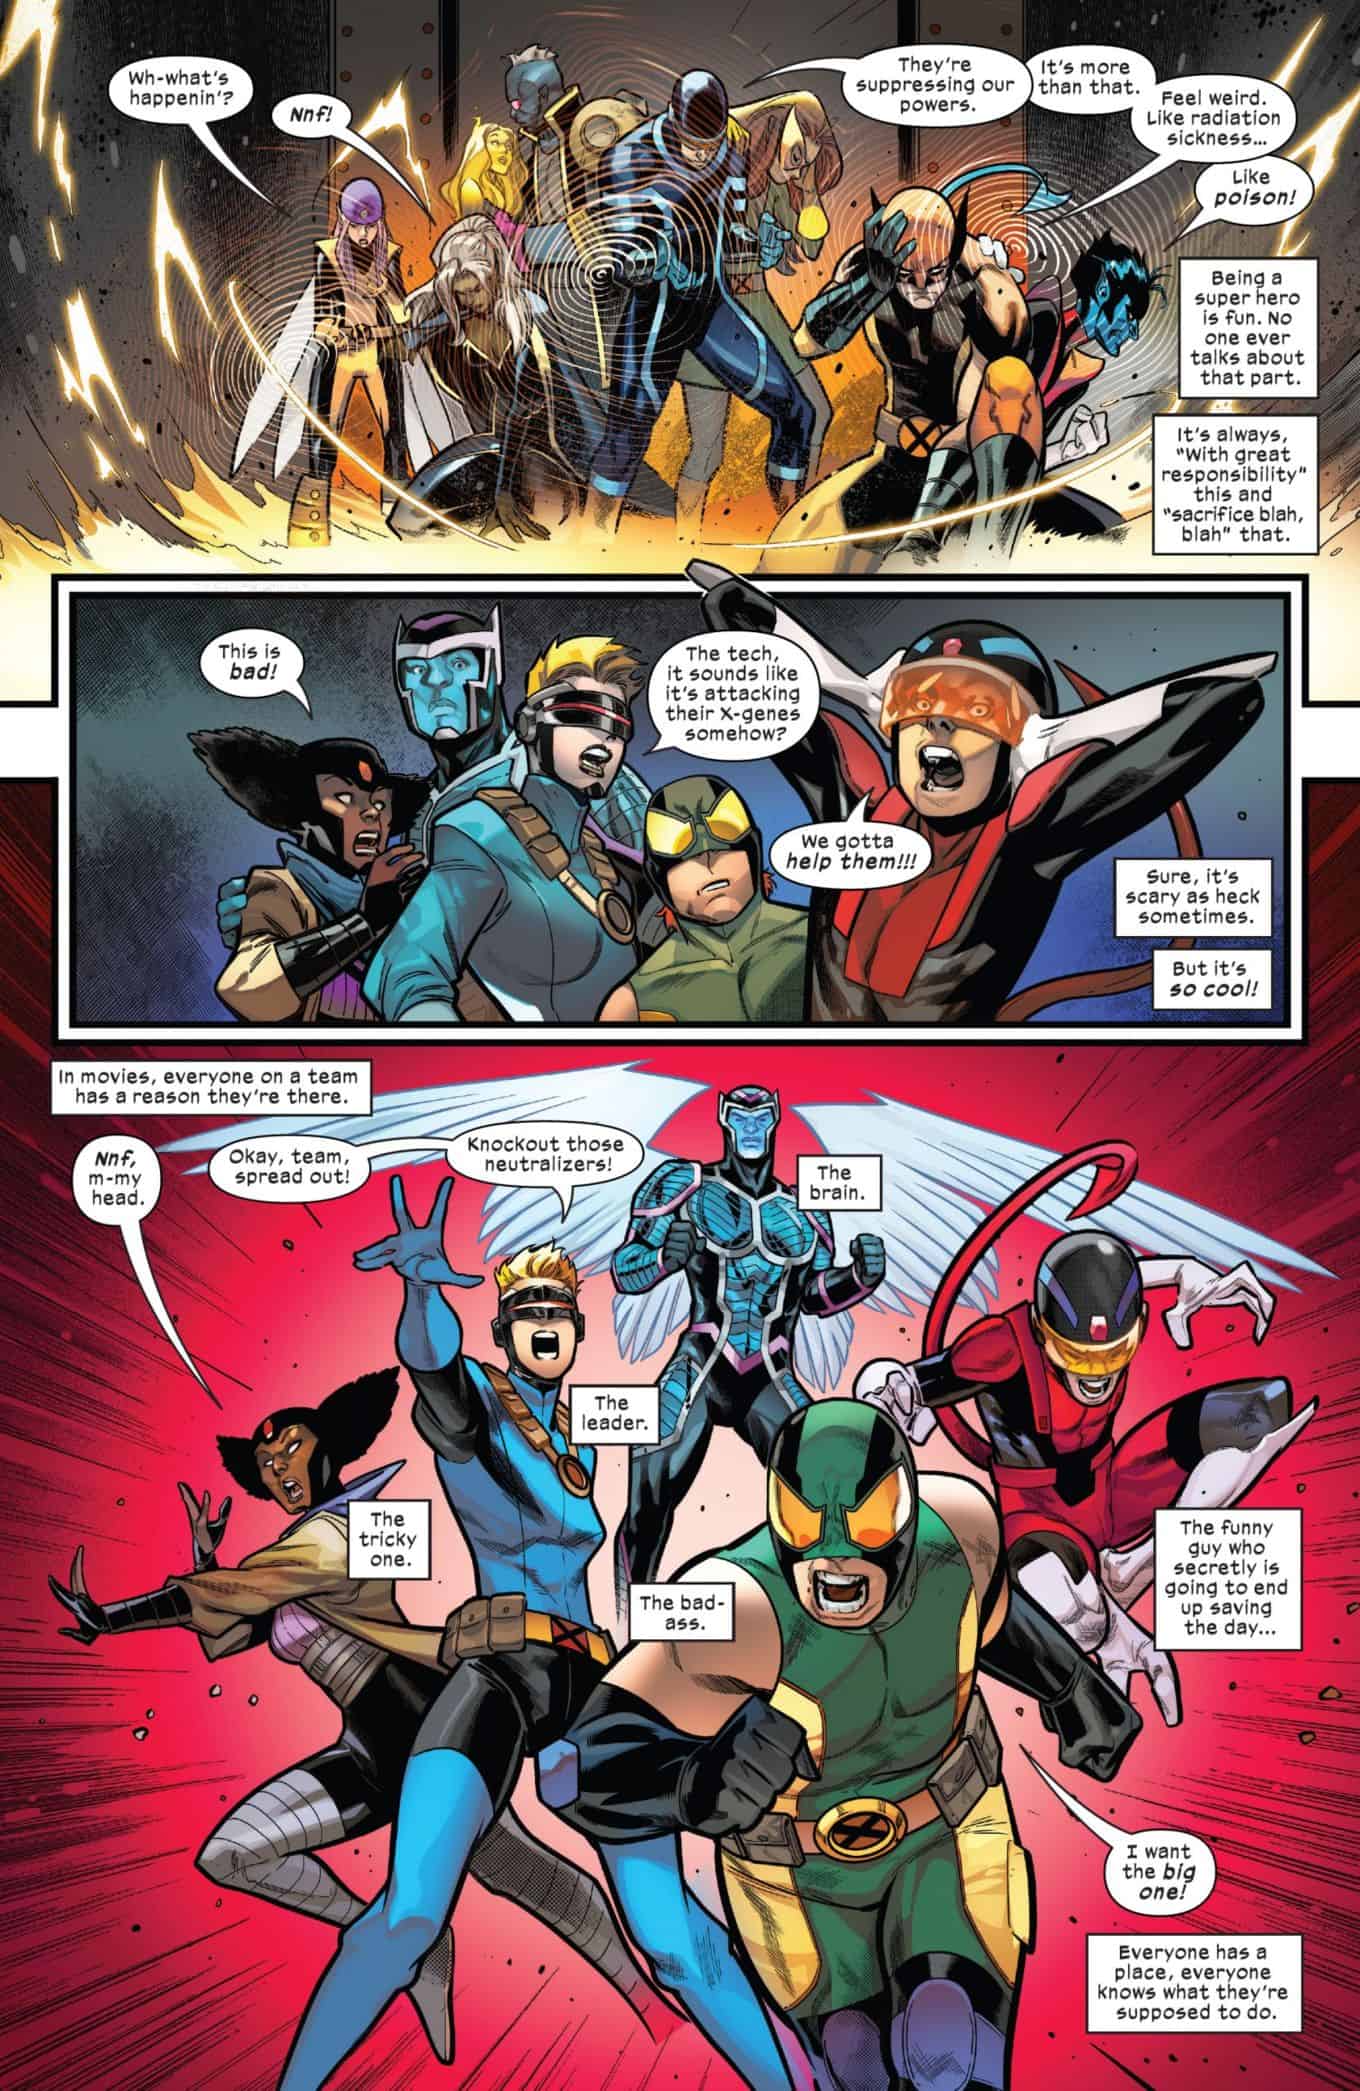 Marvel Comics & Children Of The Atom #6 Spoilers & Review: X-Men Team